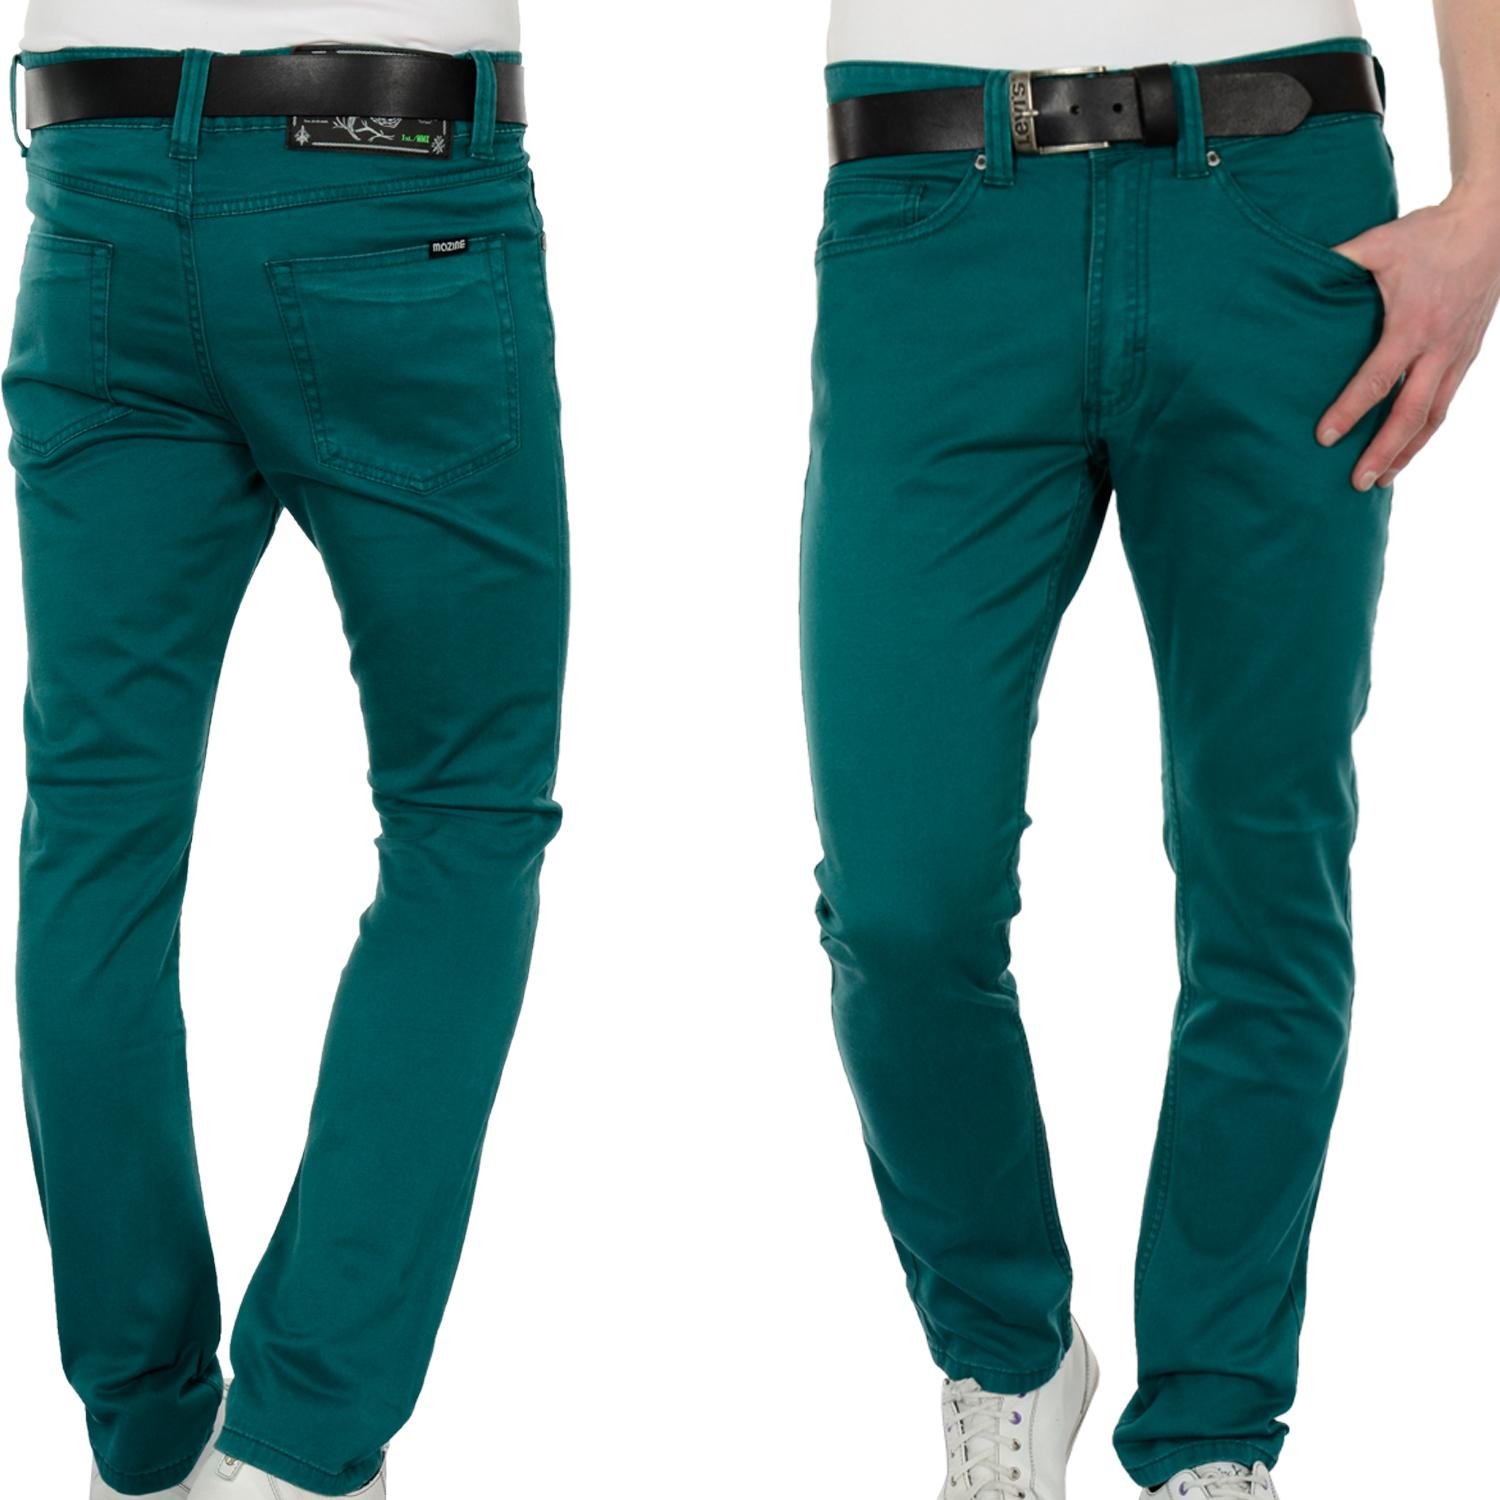 Foto Mazine Dr Grito Male Slim Fit Jeans De Color Verde Oscuro foto 874150